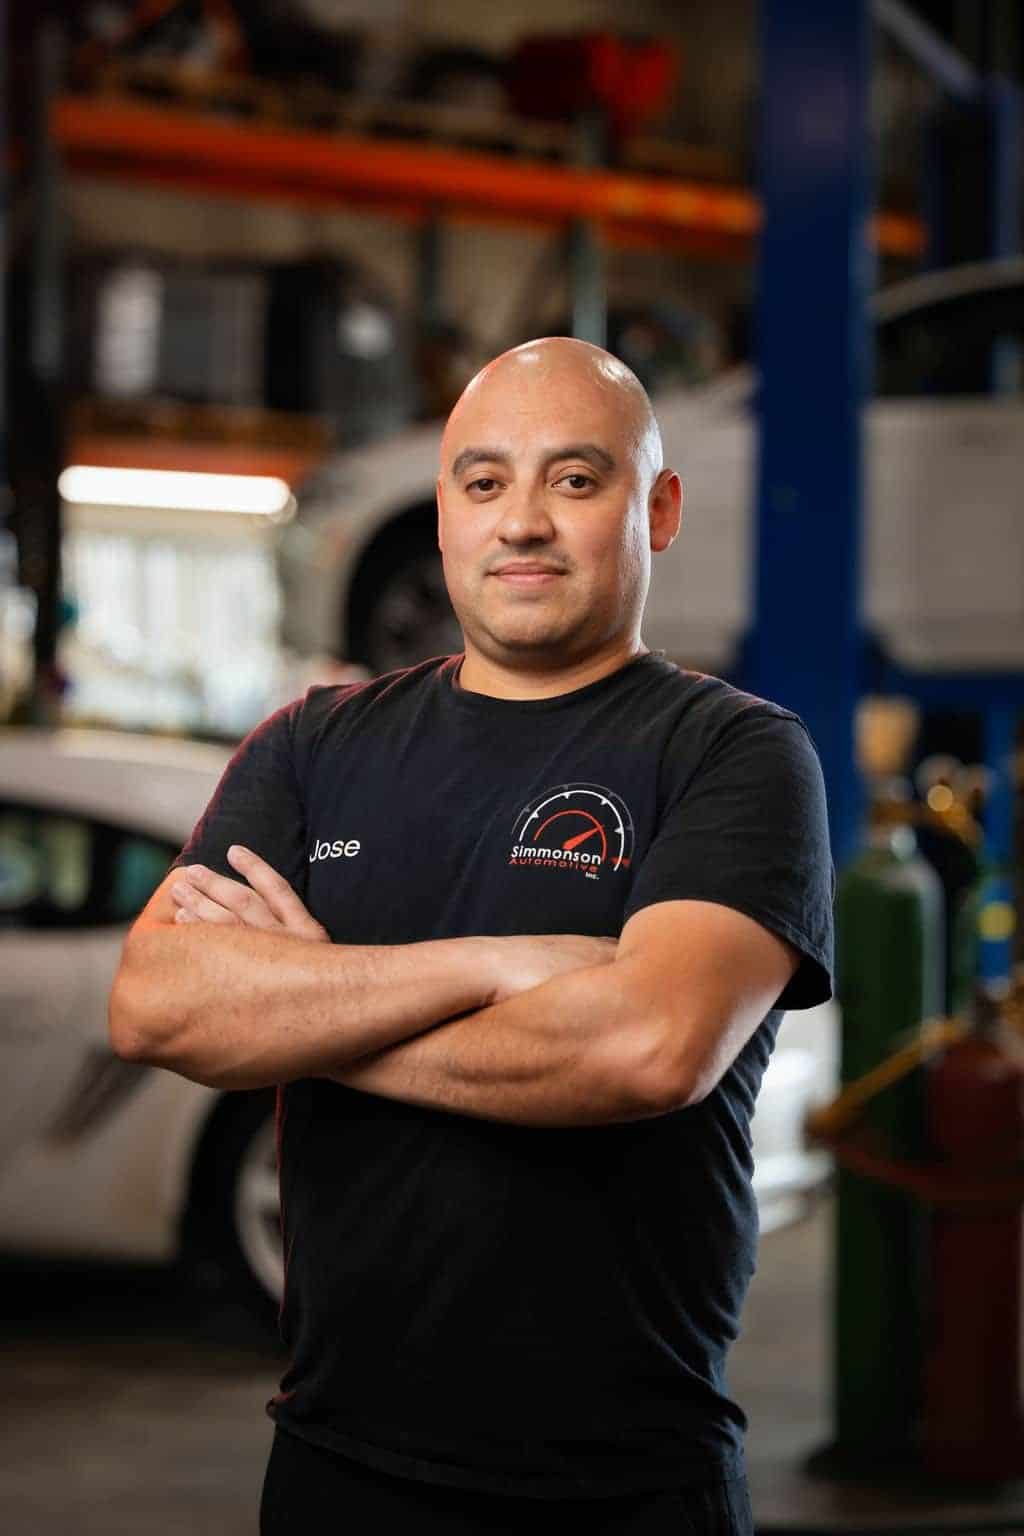 Jose Technician at Simmonson Automotive